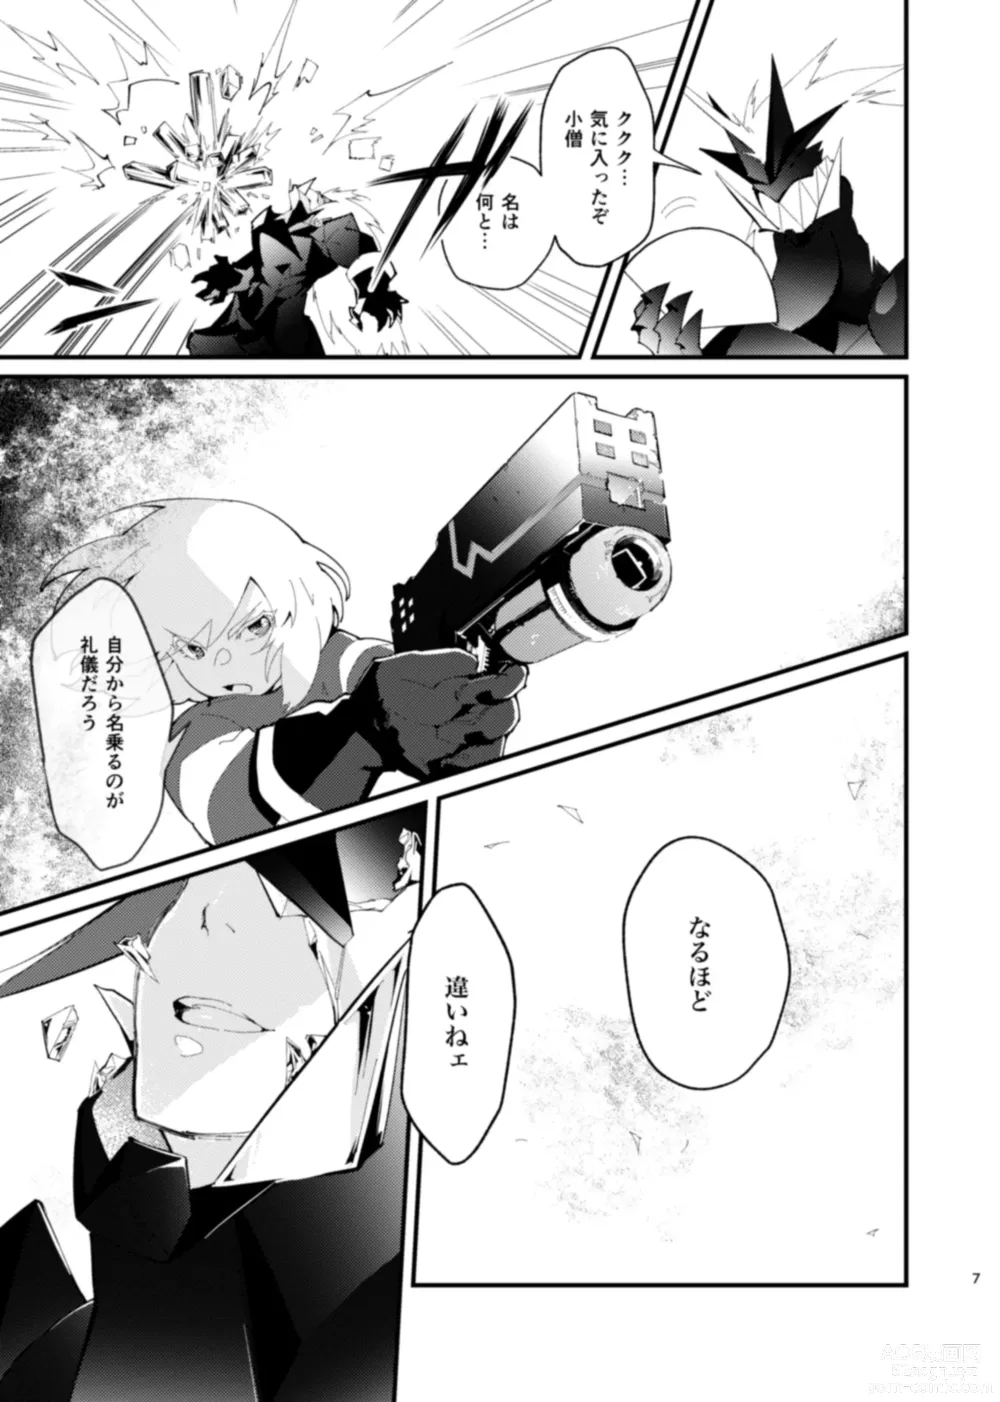 Page 7 of doujinshi NetoLio